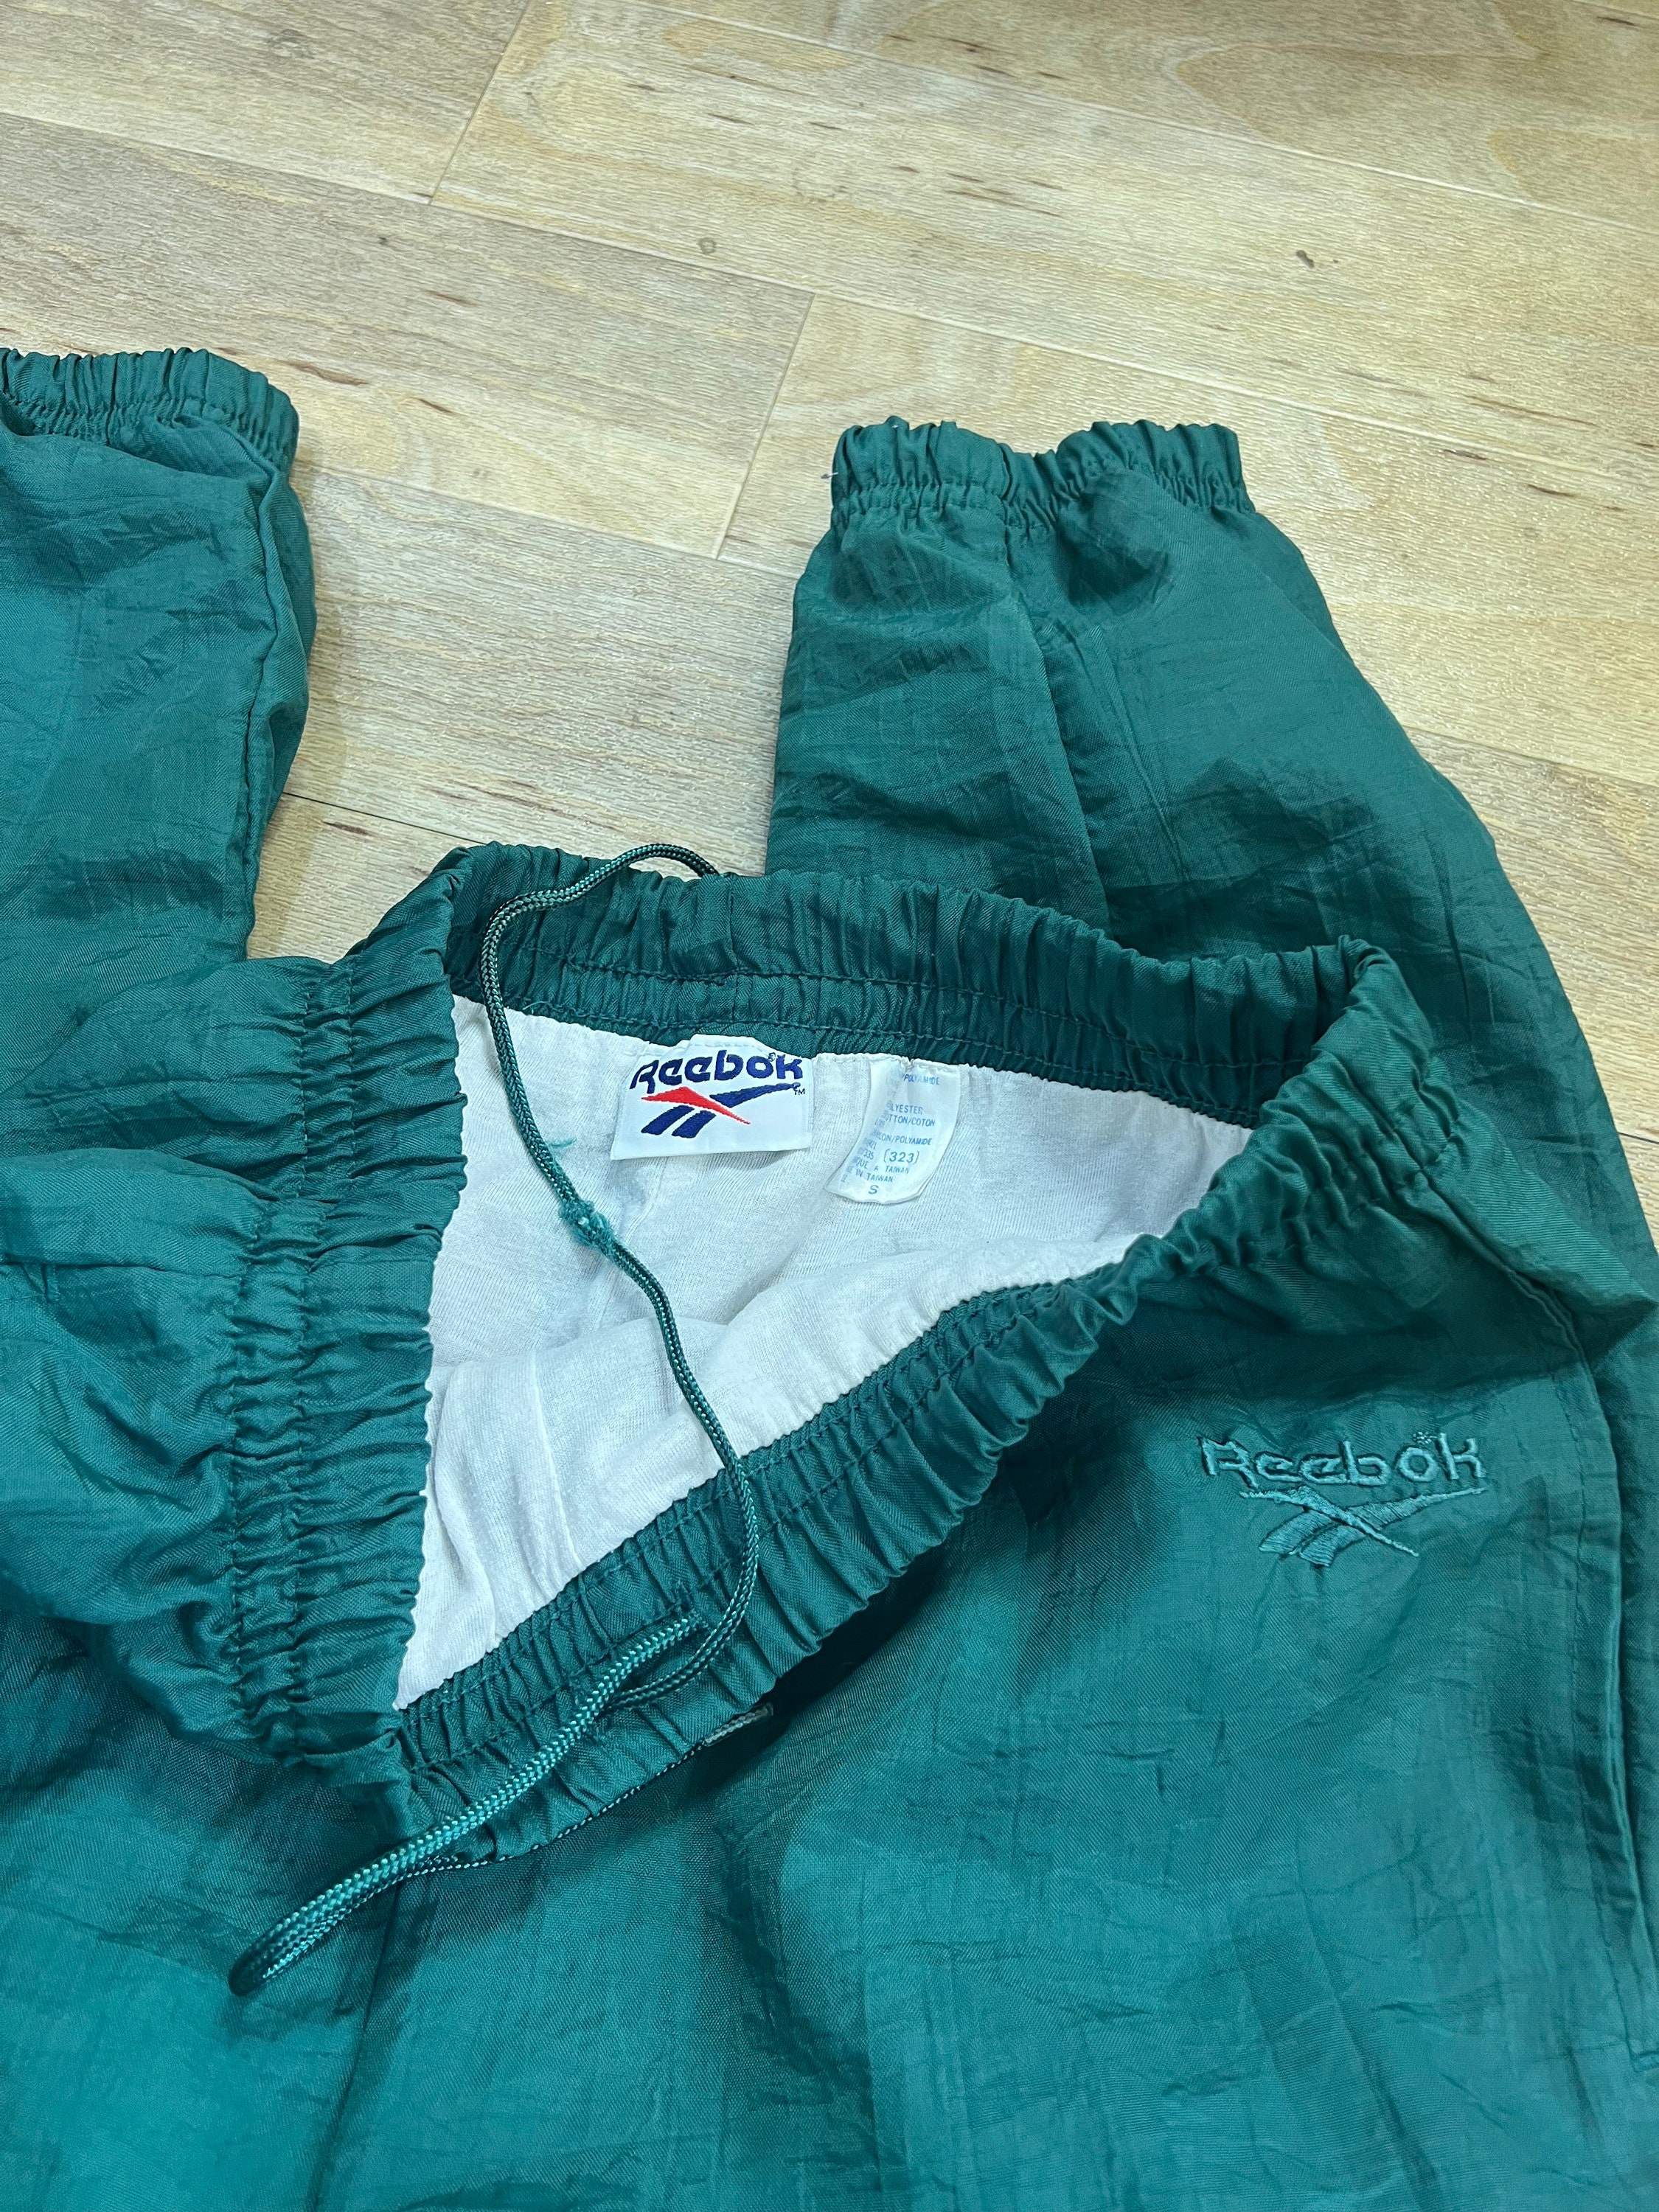 Vintage Reebok Cuffed Track Pants - Men's Medium